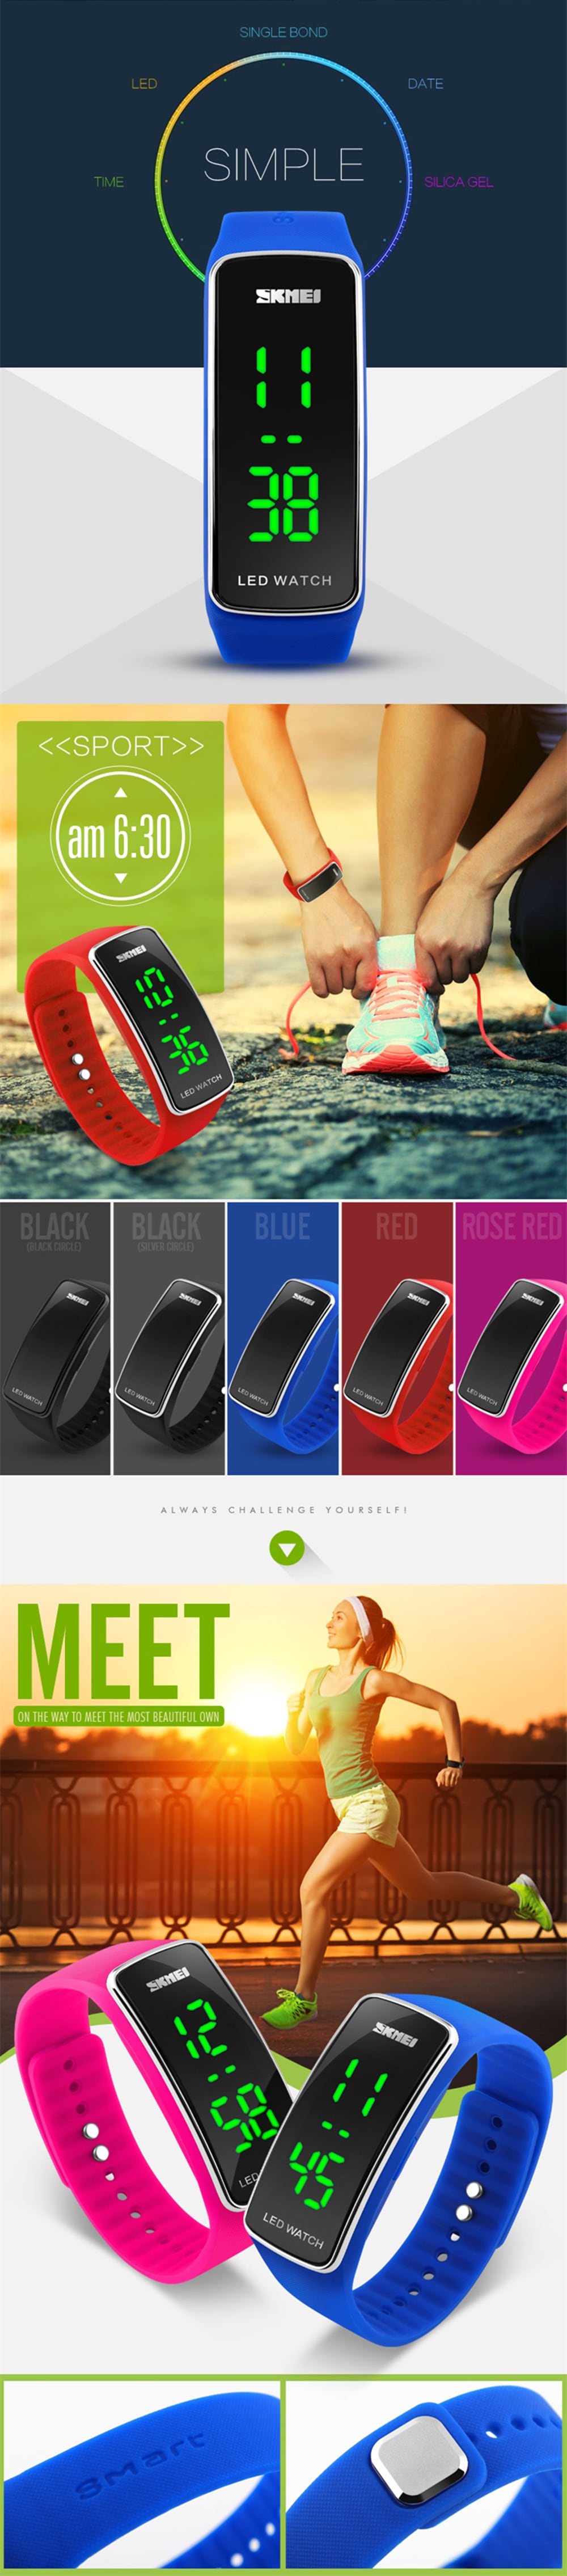 SKMEI Unisex Slim Design LED Digital Silicone Strap Watch Cool Watches- Black